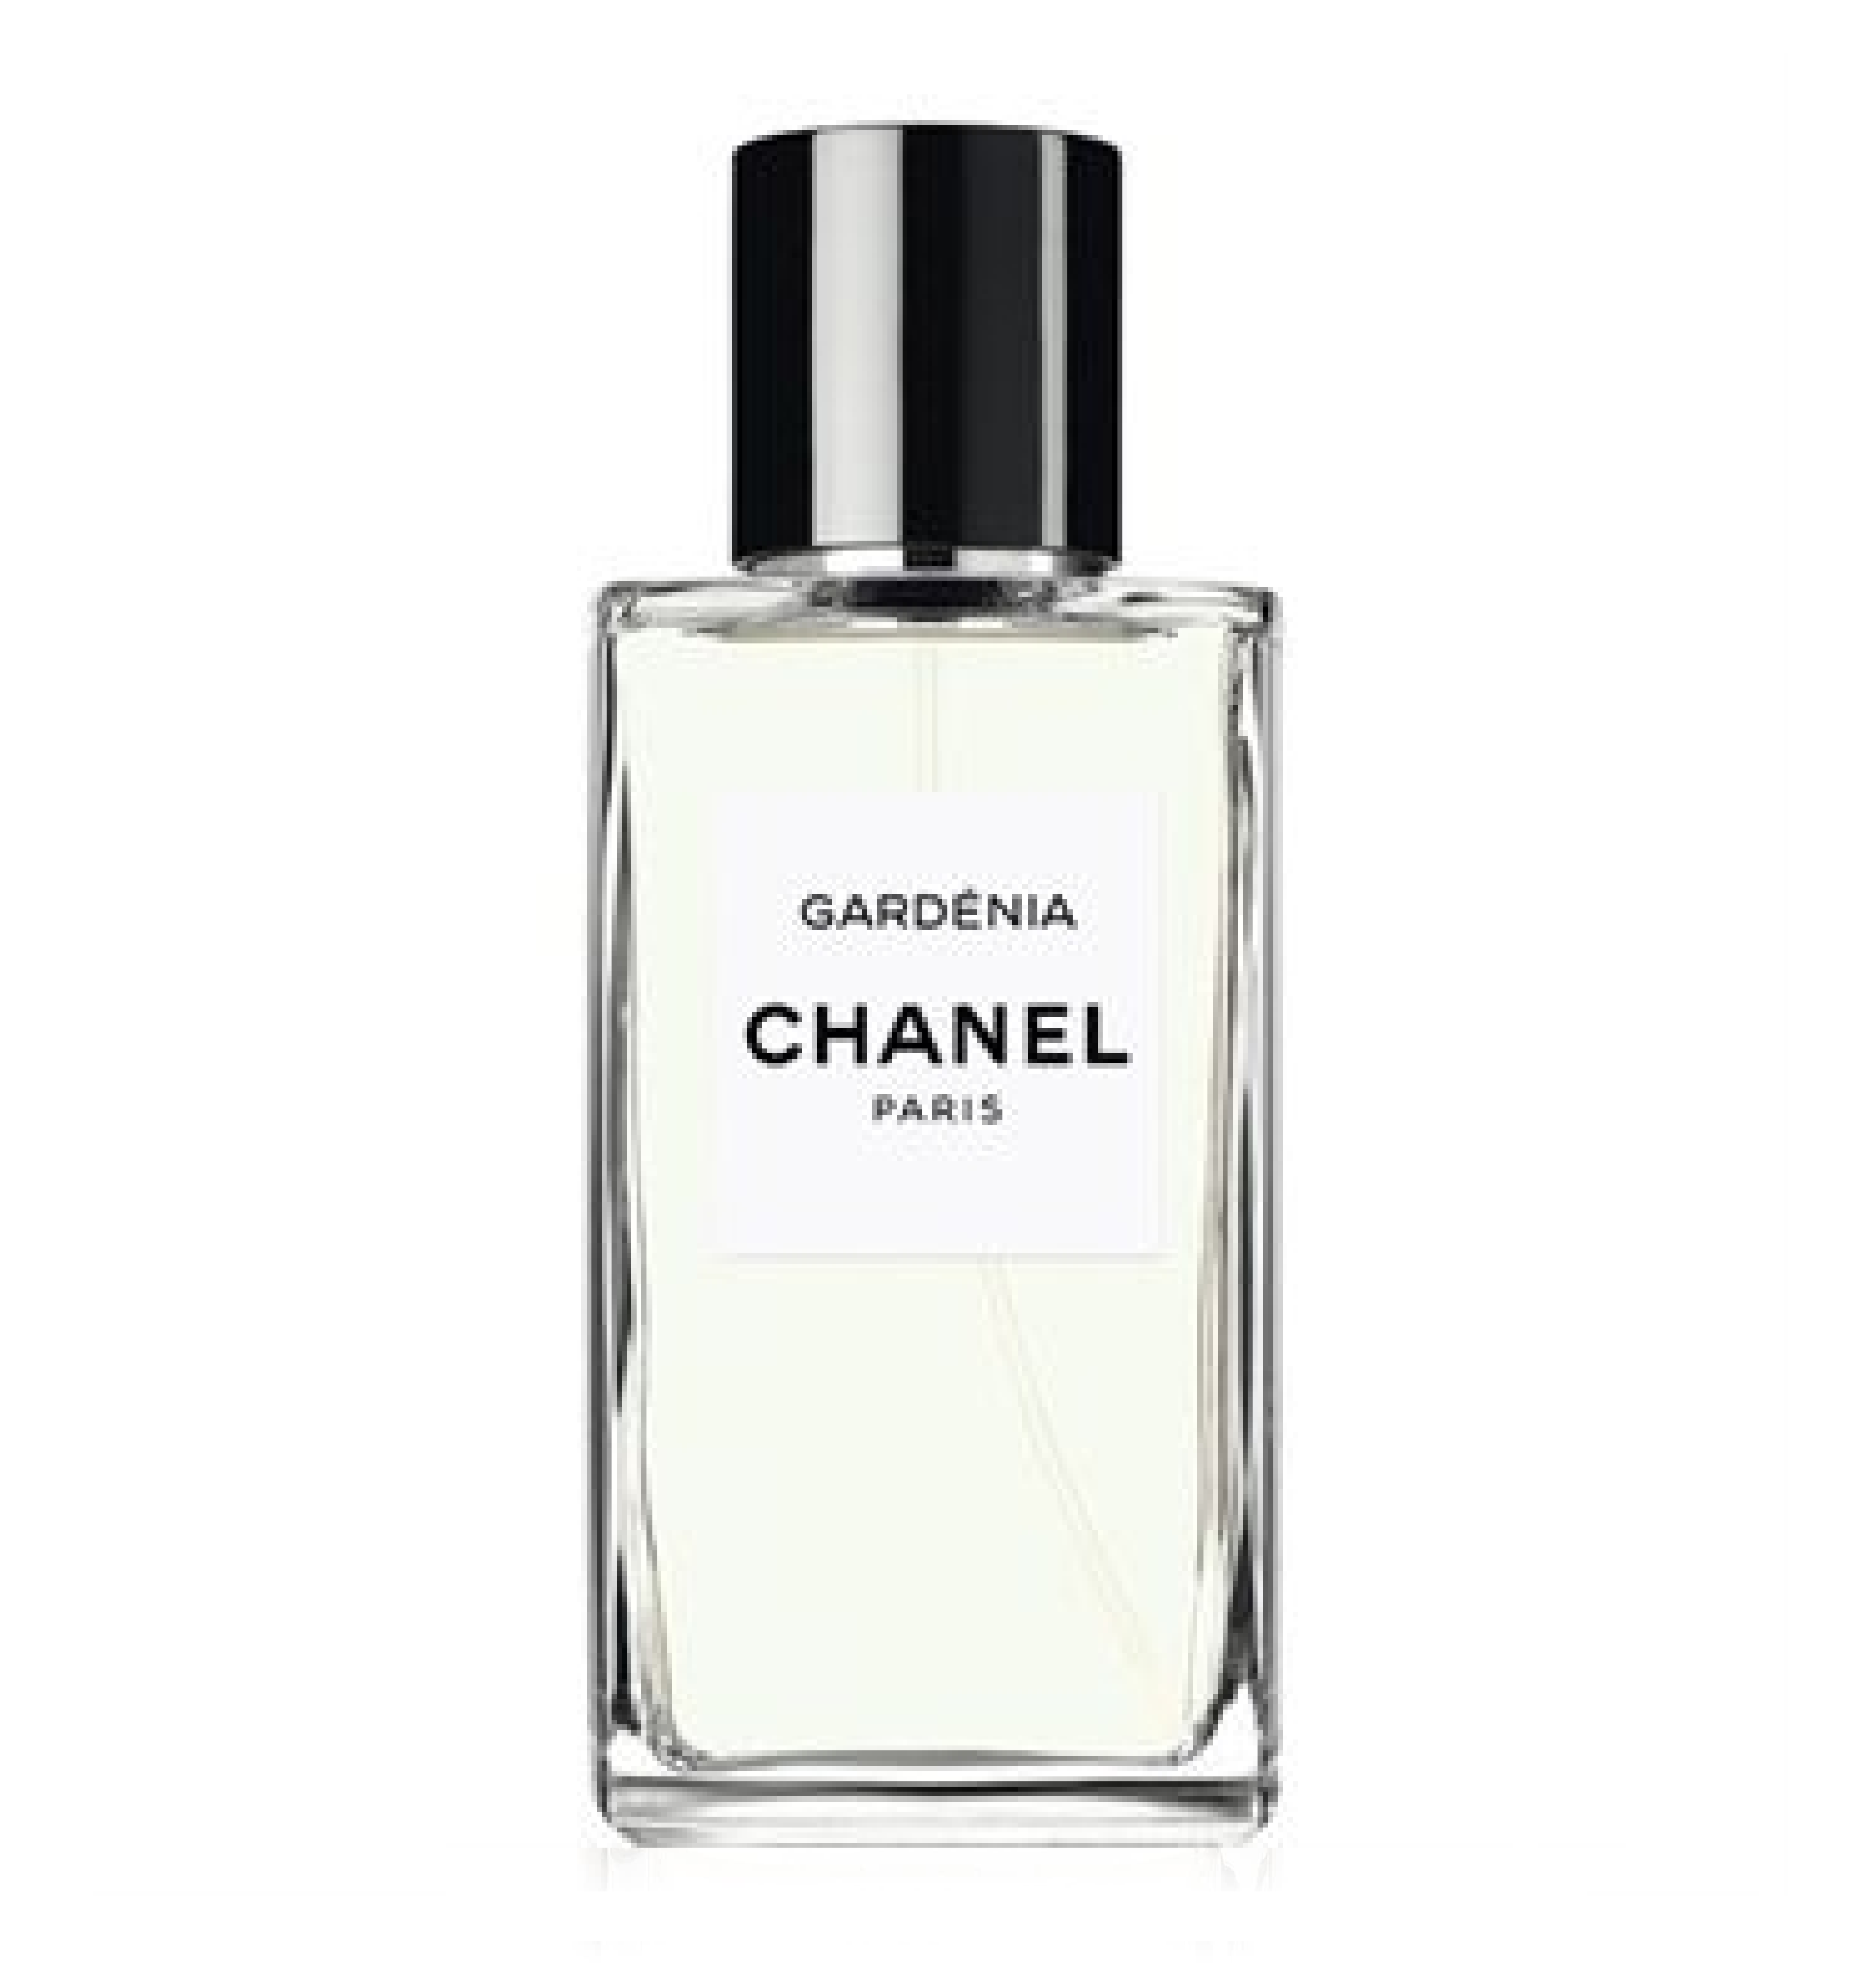 Chanel – Gardenia, (シャネル – ガーデニア)